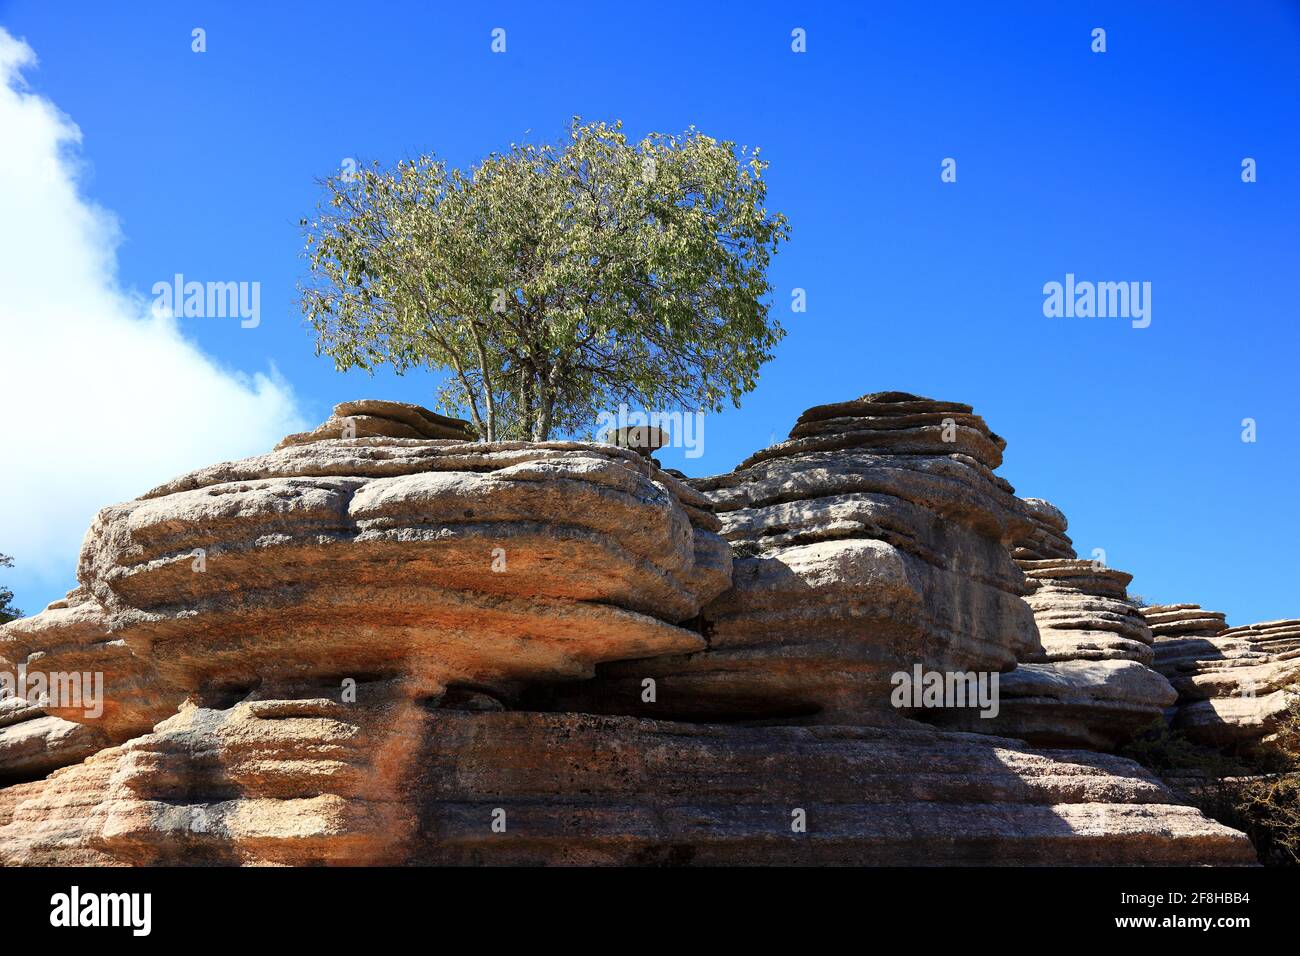 Bizzarre formazioni rocciose nel Parco Nazionale El Torca, Paraje Natural Torcal de Antequera, ist ein 1171 ha grosses Naturschutzgebiet con auss??ergewoehnl Foto Stock